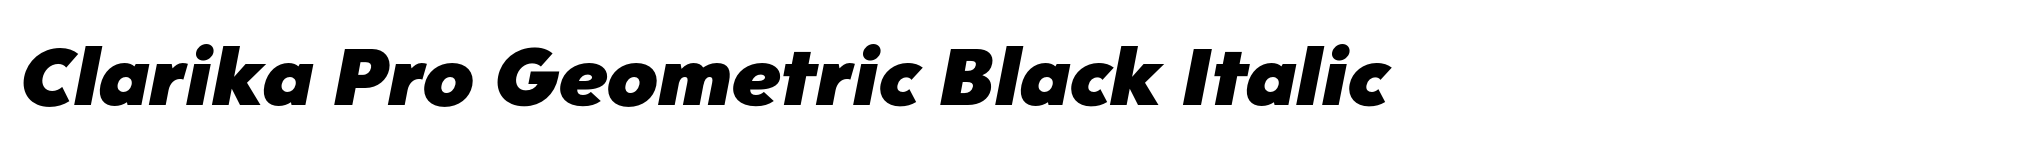 Clarika Pro Geometric Black Italic image